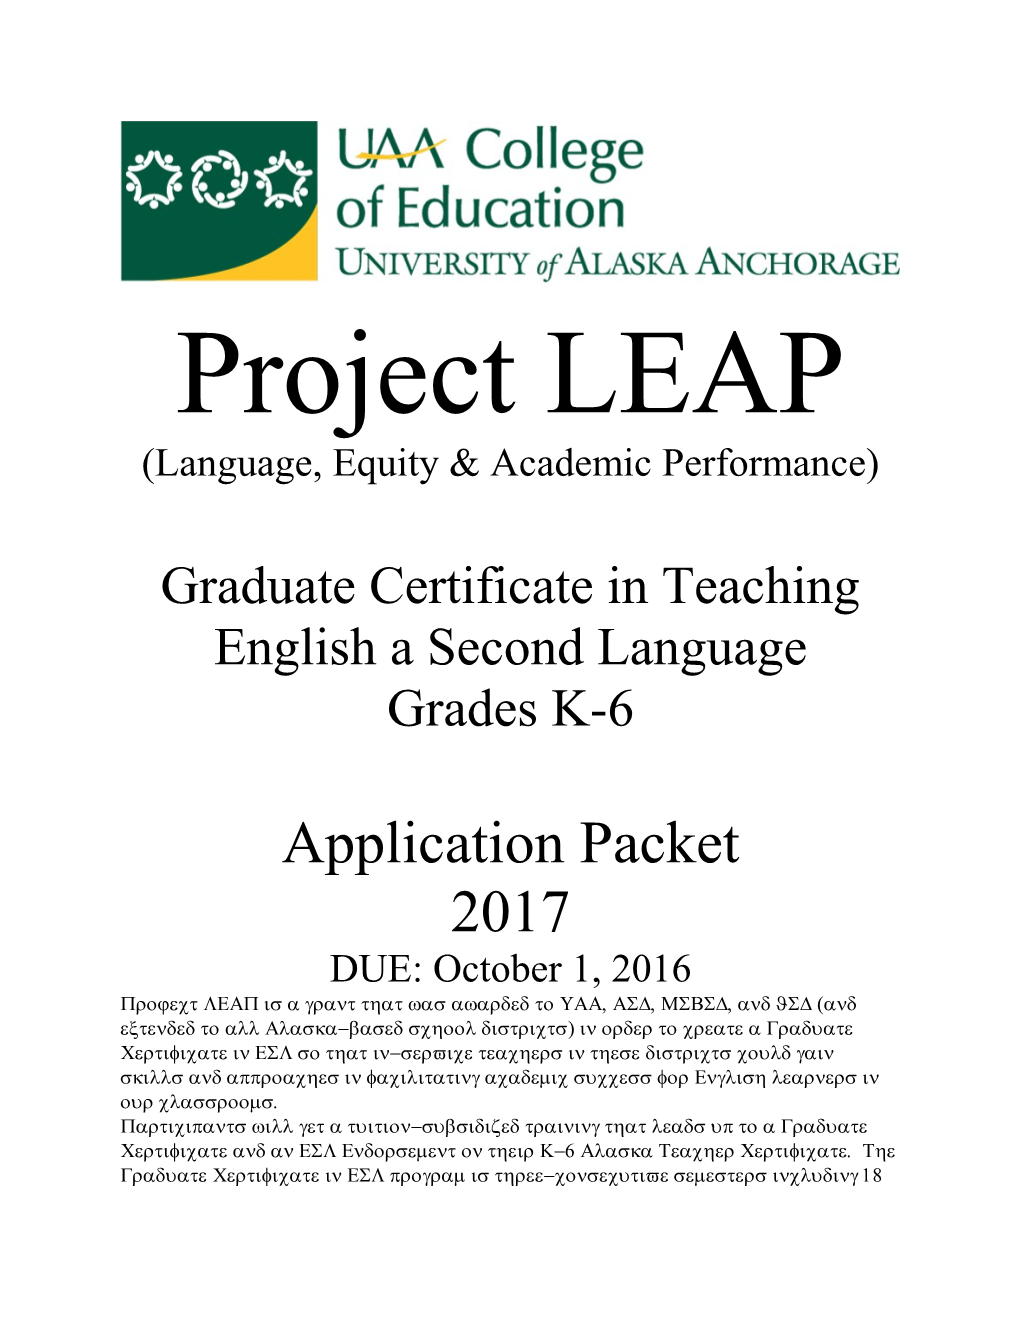 Language, Equity & Academic Performance